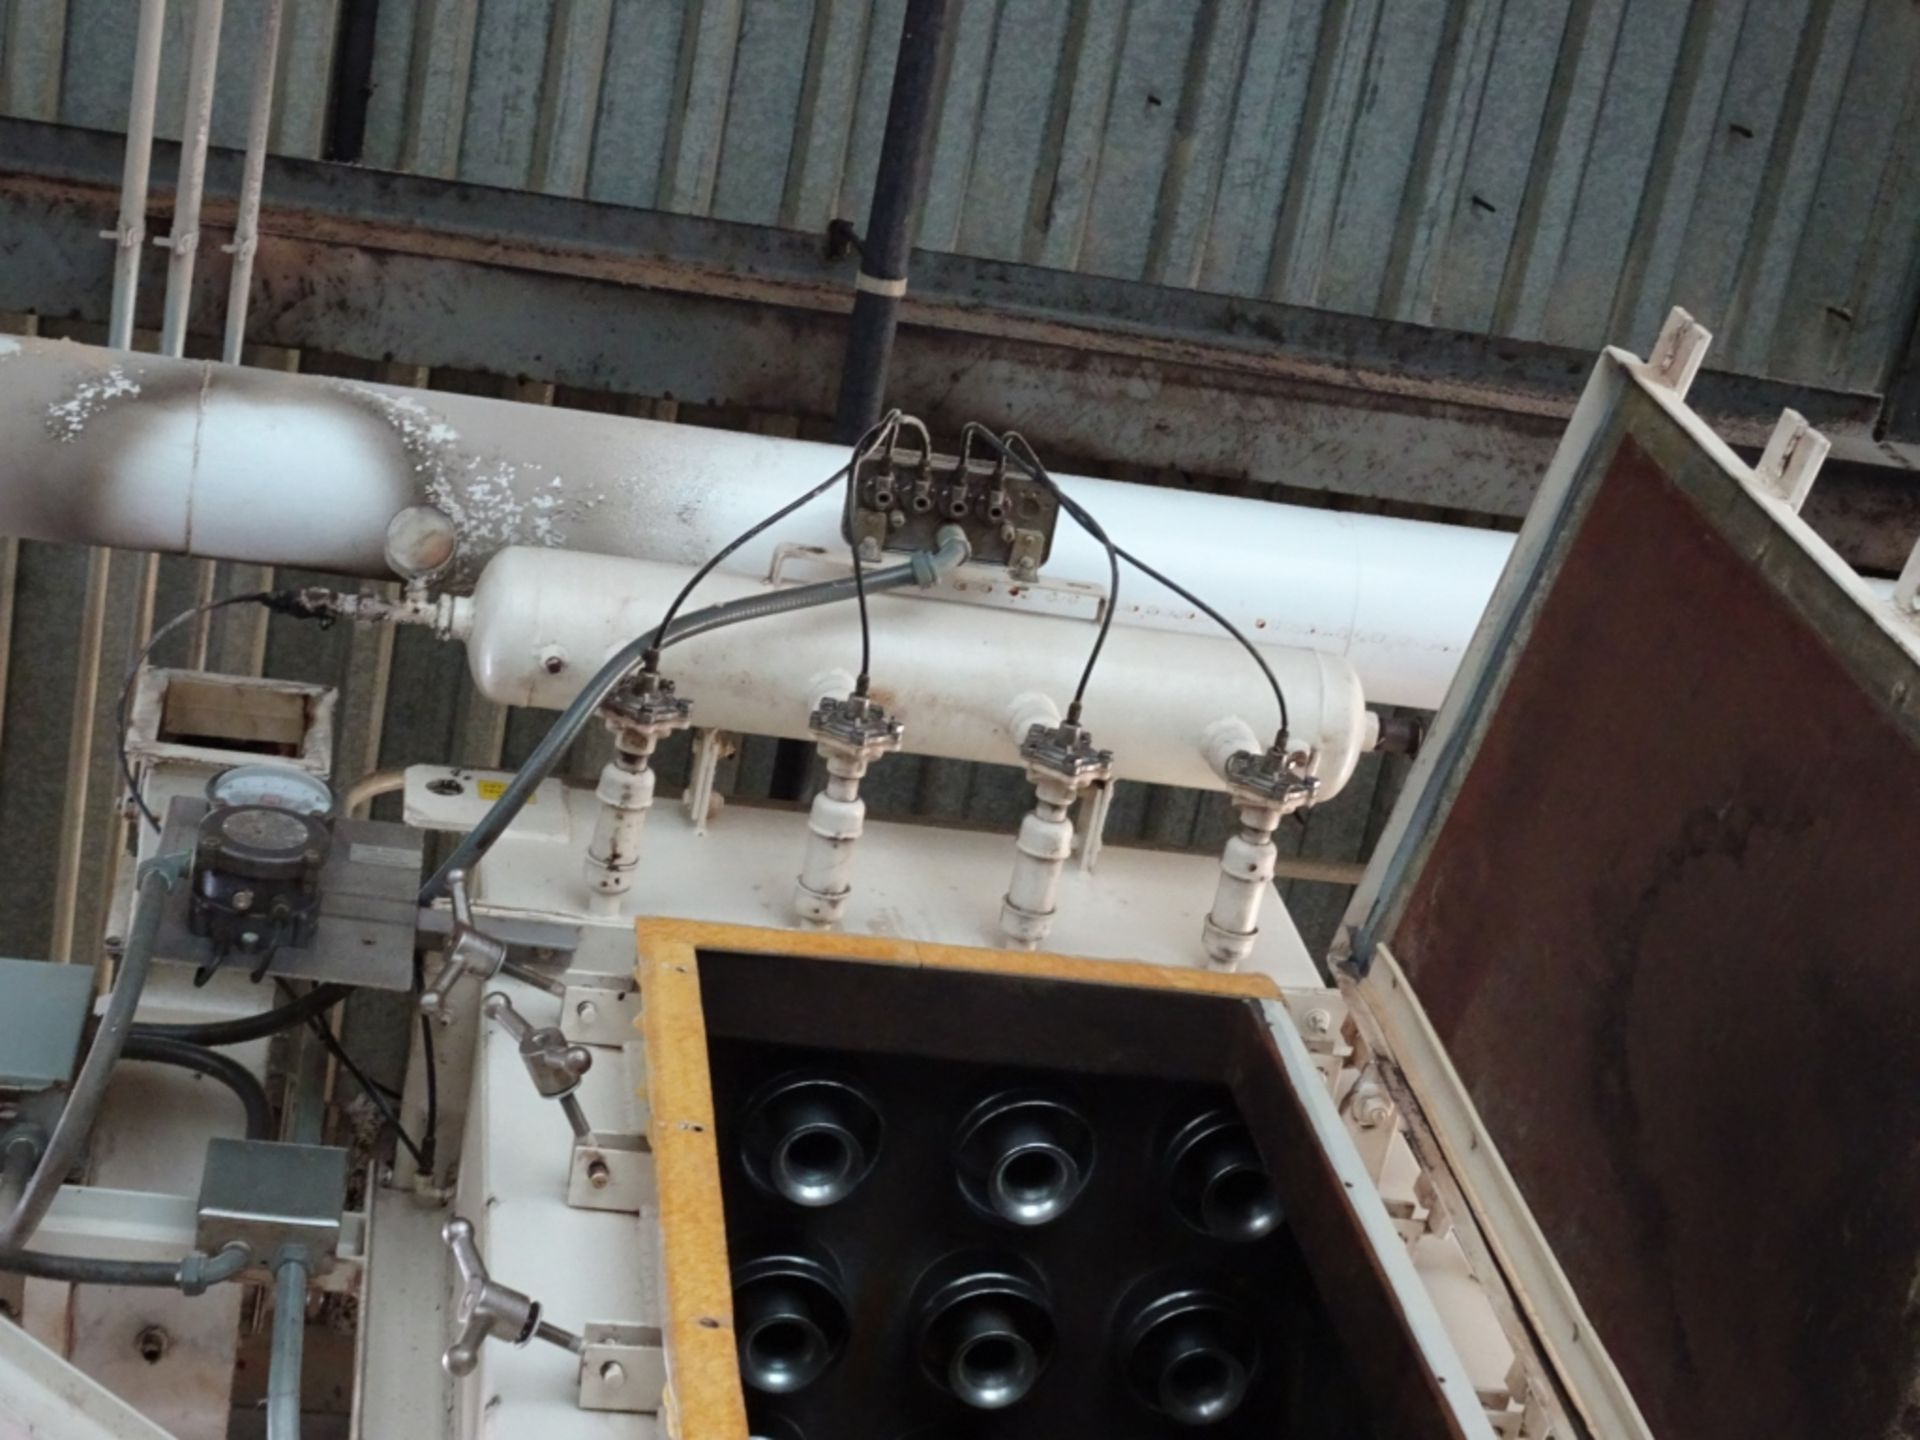 Buhler 32x32"x10' Airlock Material Drying Bin sn 54980948 w/ Associated Blow Motor, Material Feed - Image 7 of 19